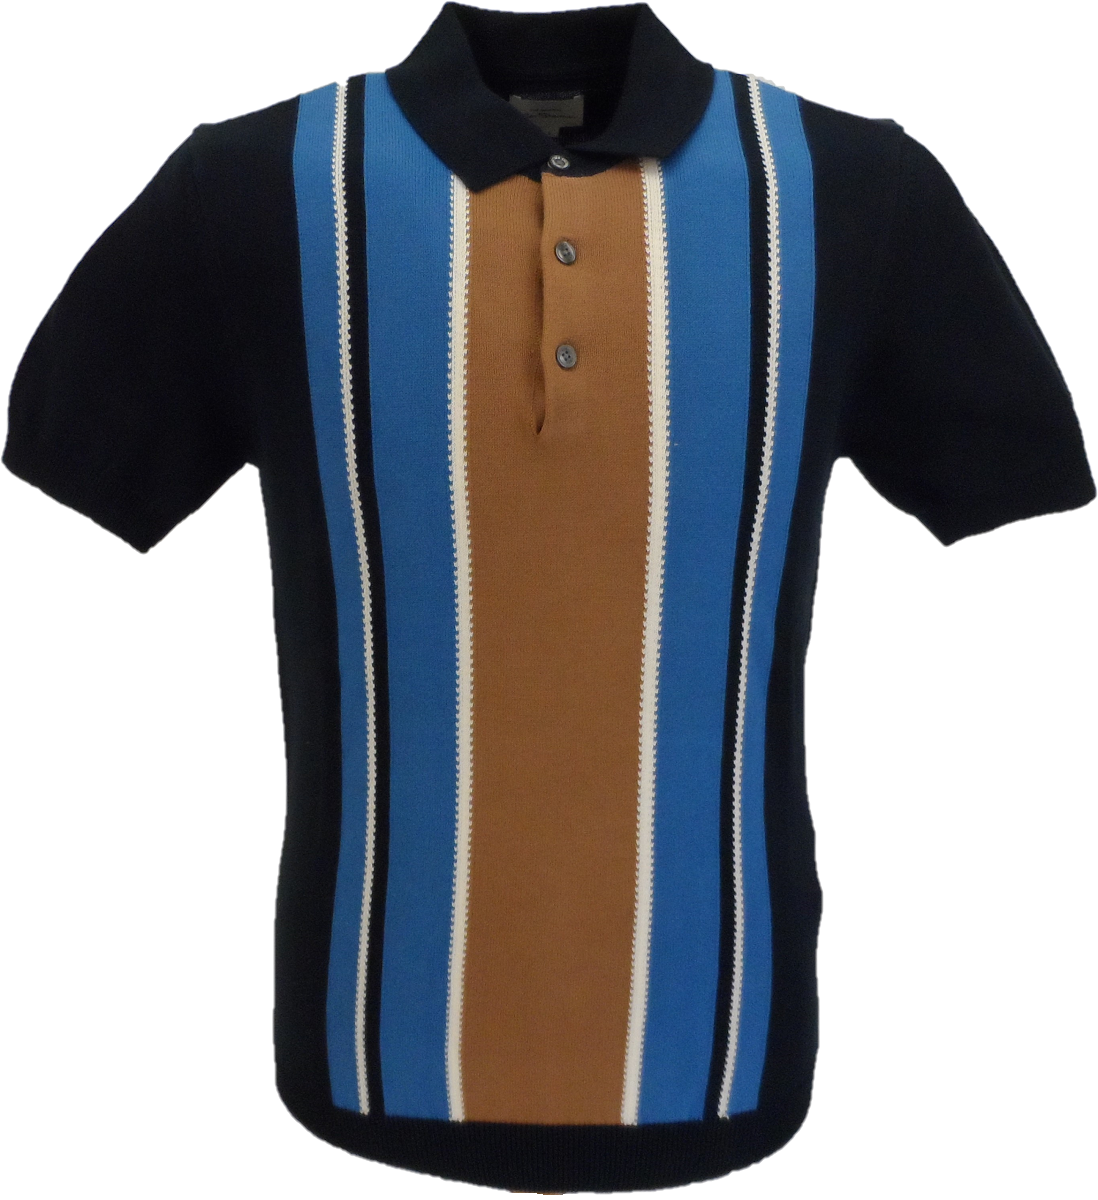 Ben Sherman Navy Knitted Striped Mod Polo Shirt